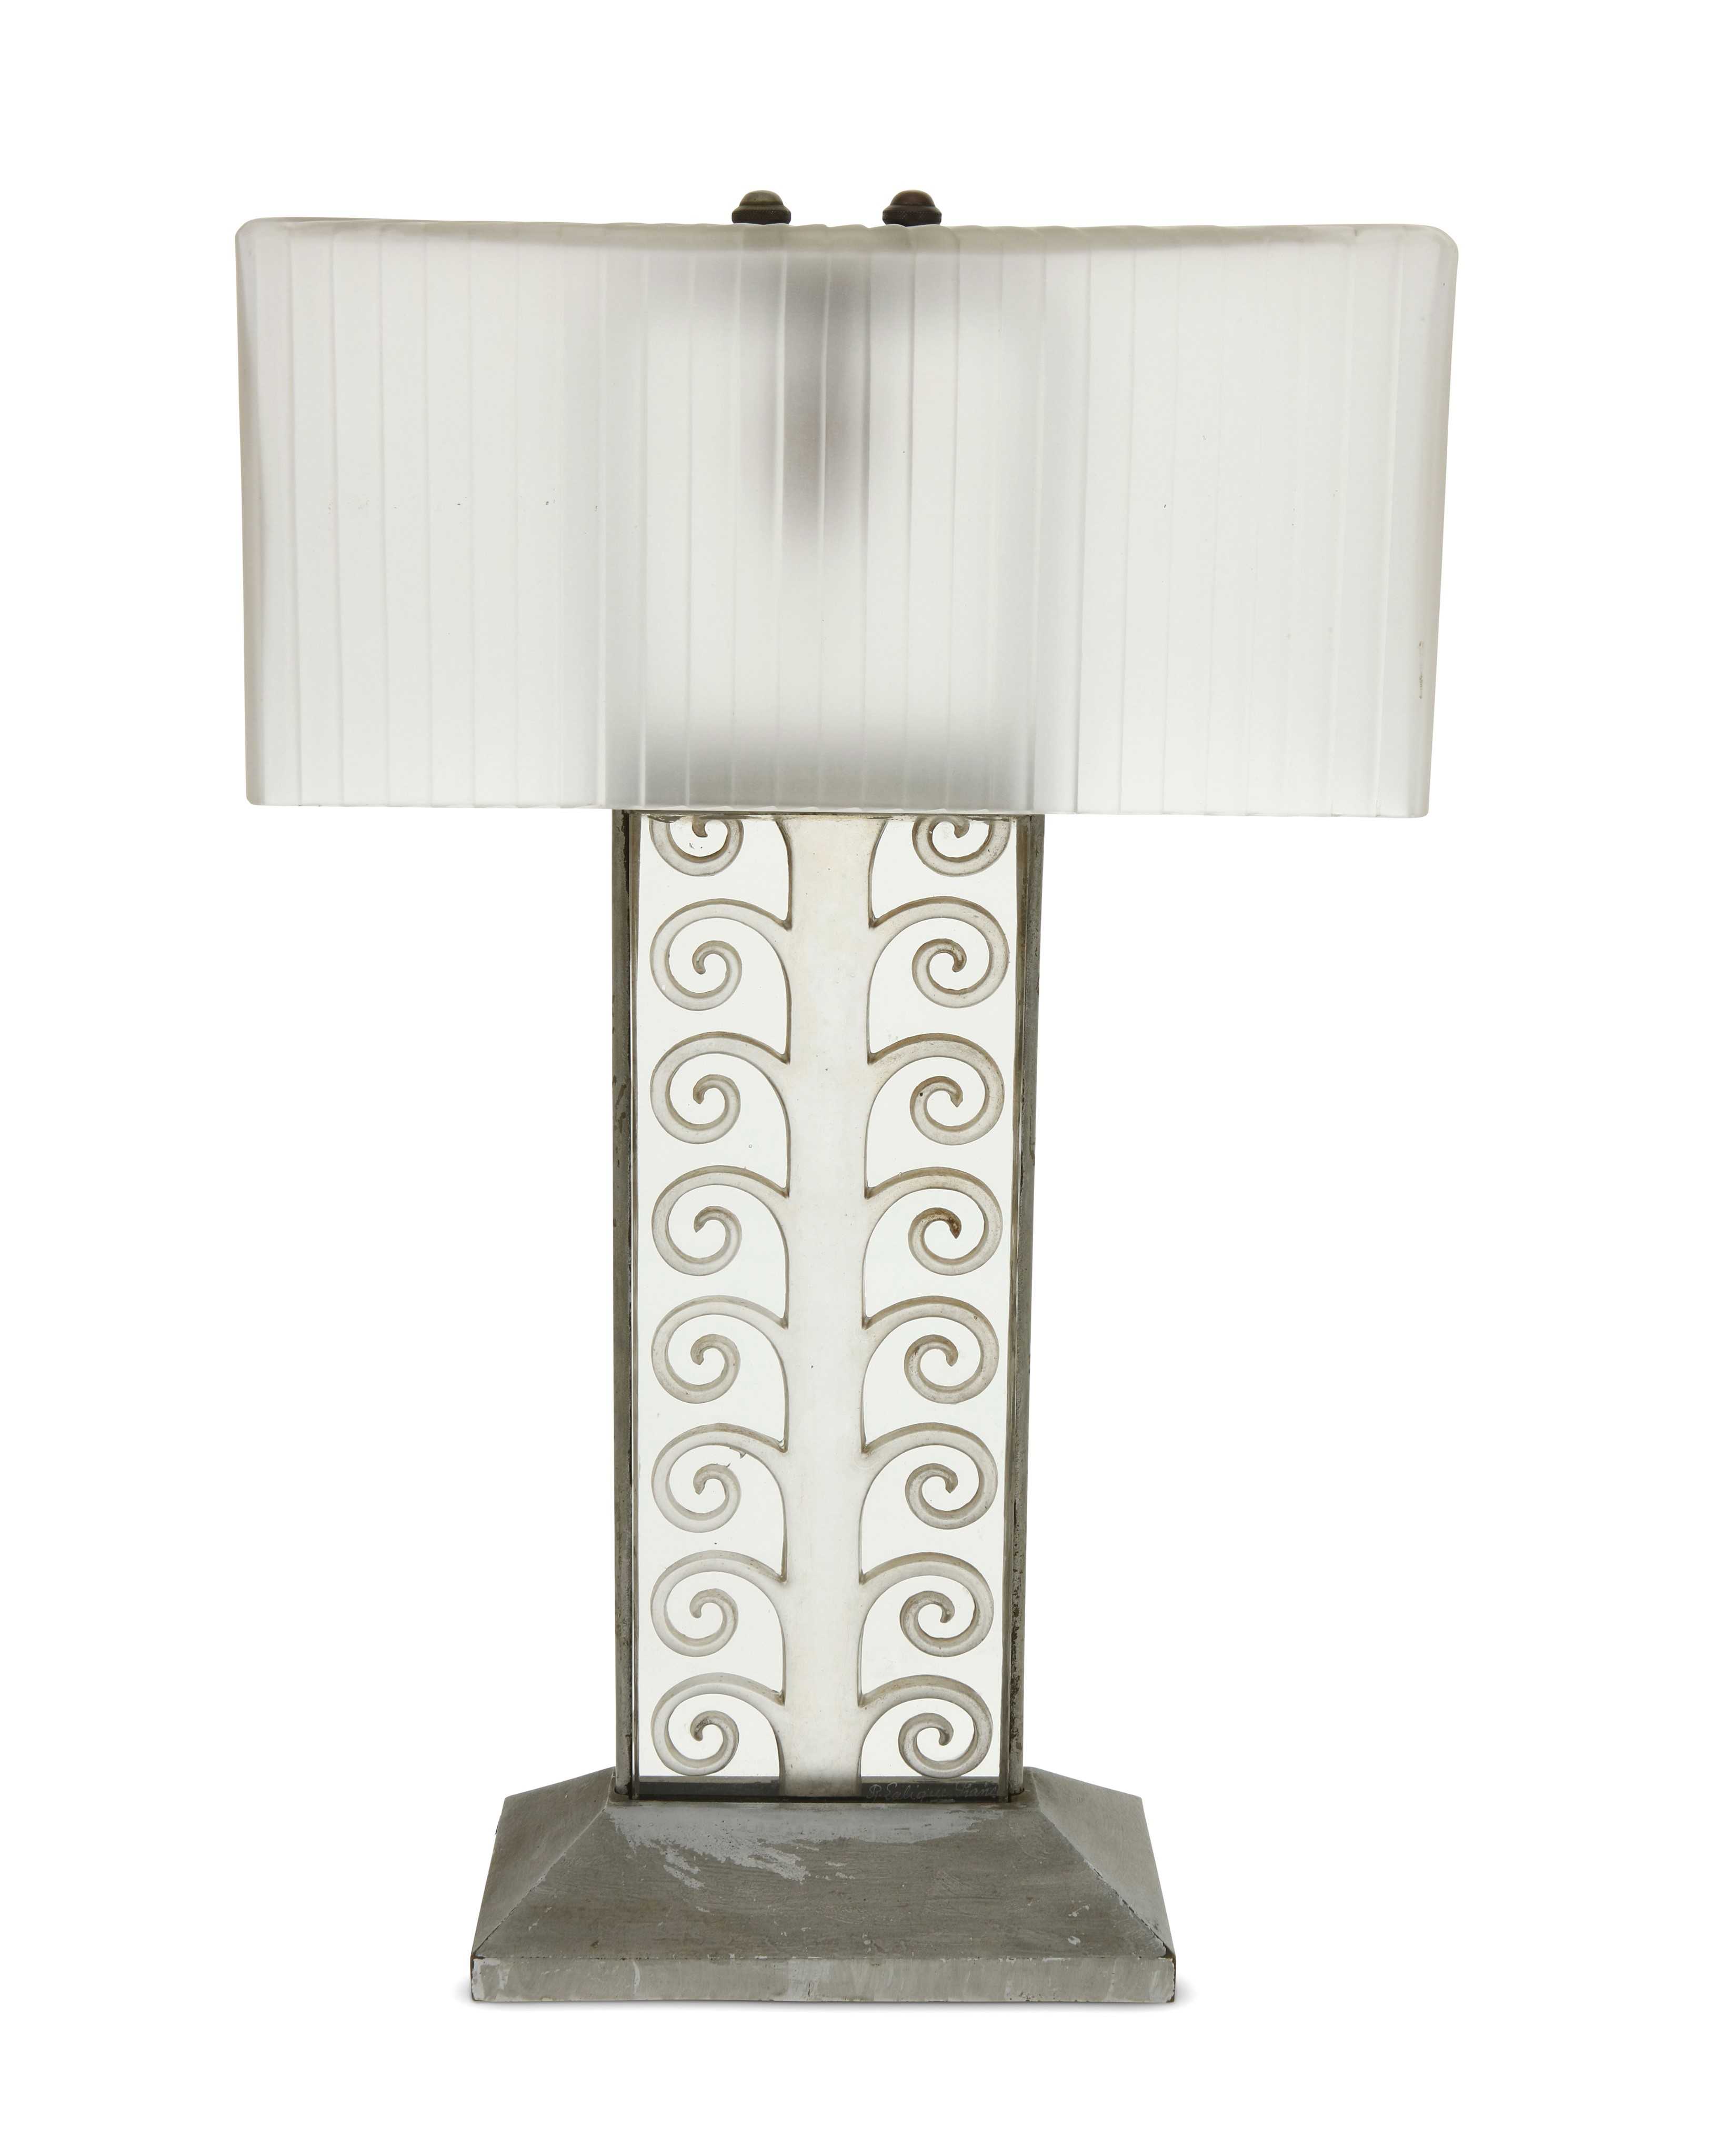 René Lalique Cardamine lamp, estimated at $8,000-$12,000 at Moran.